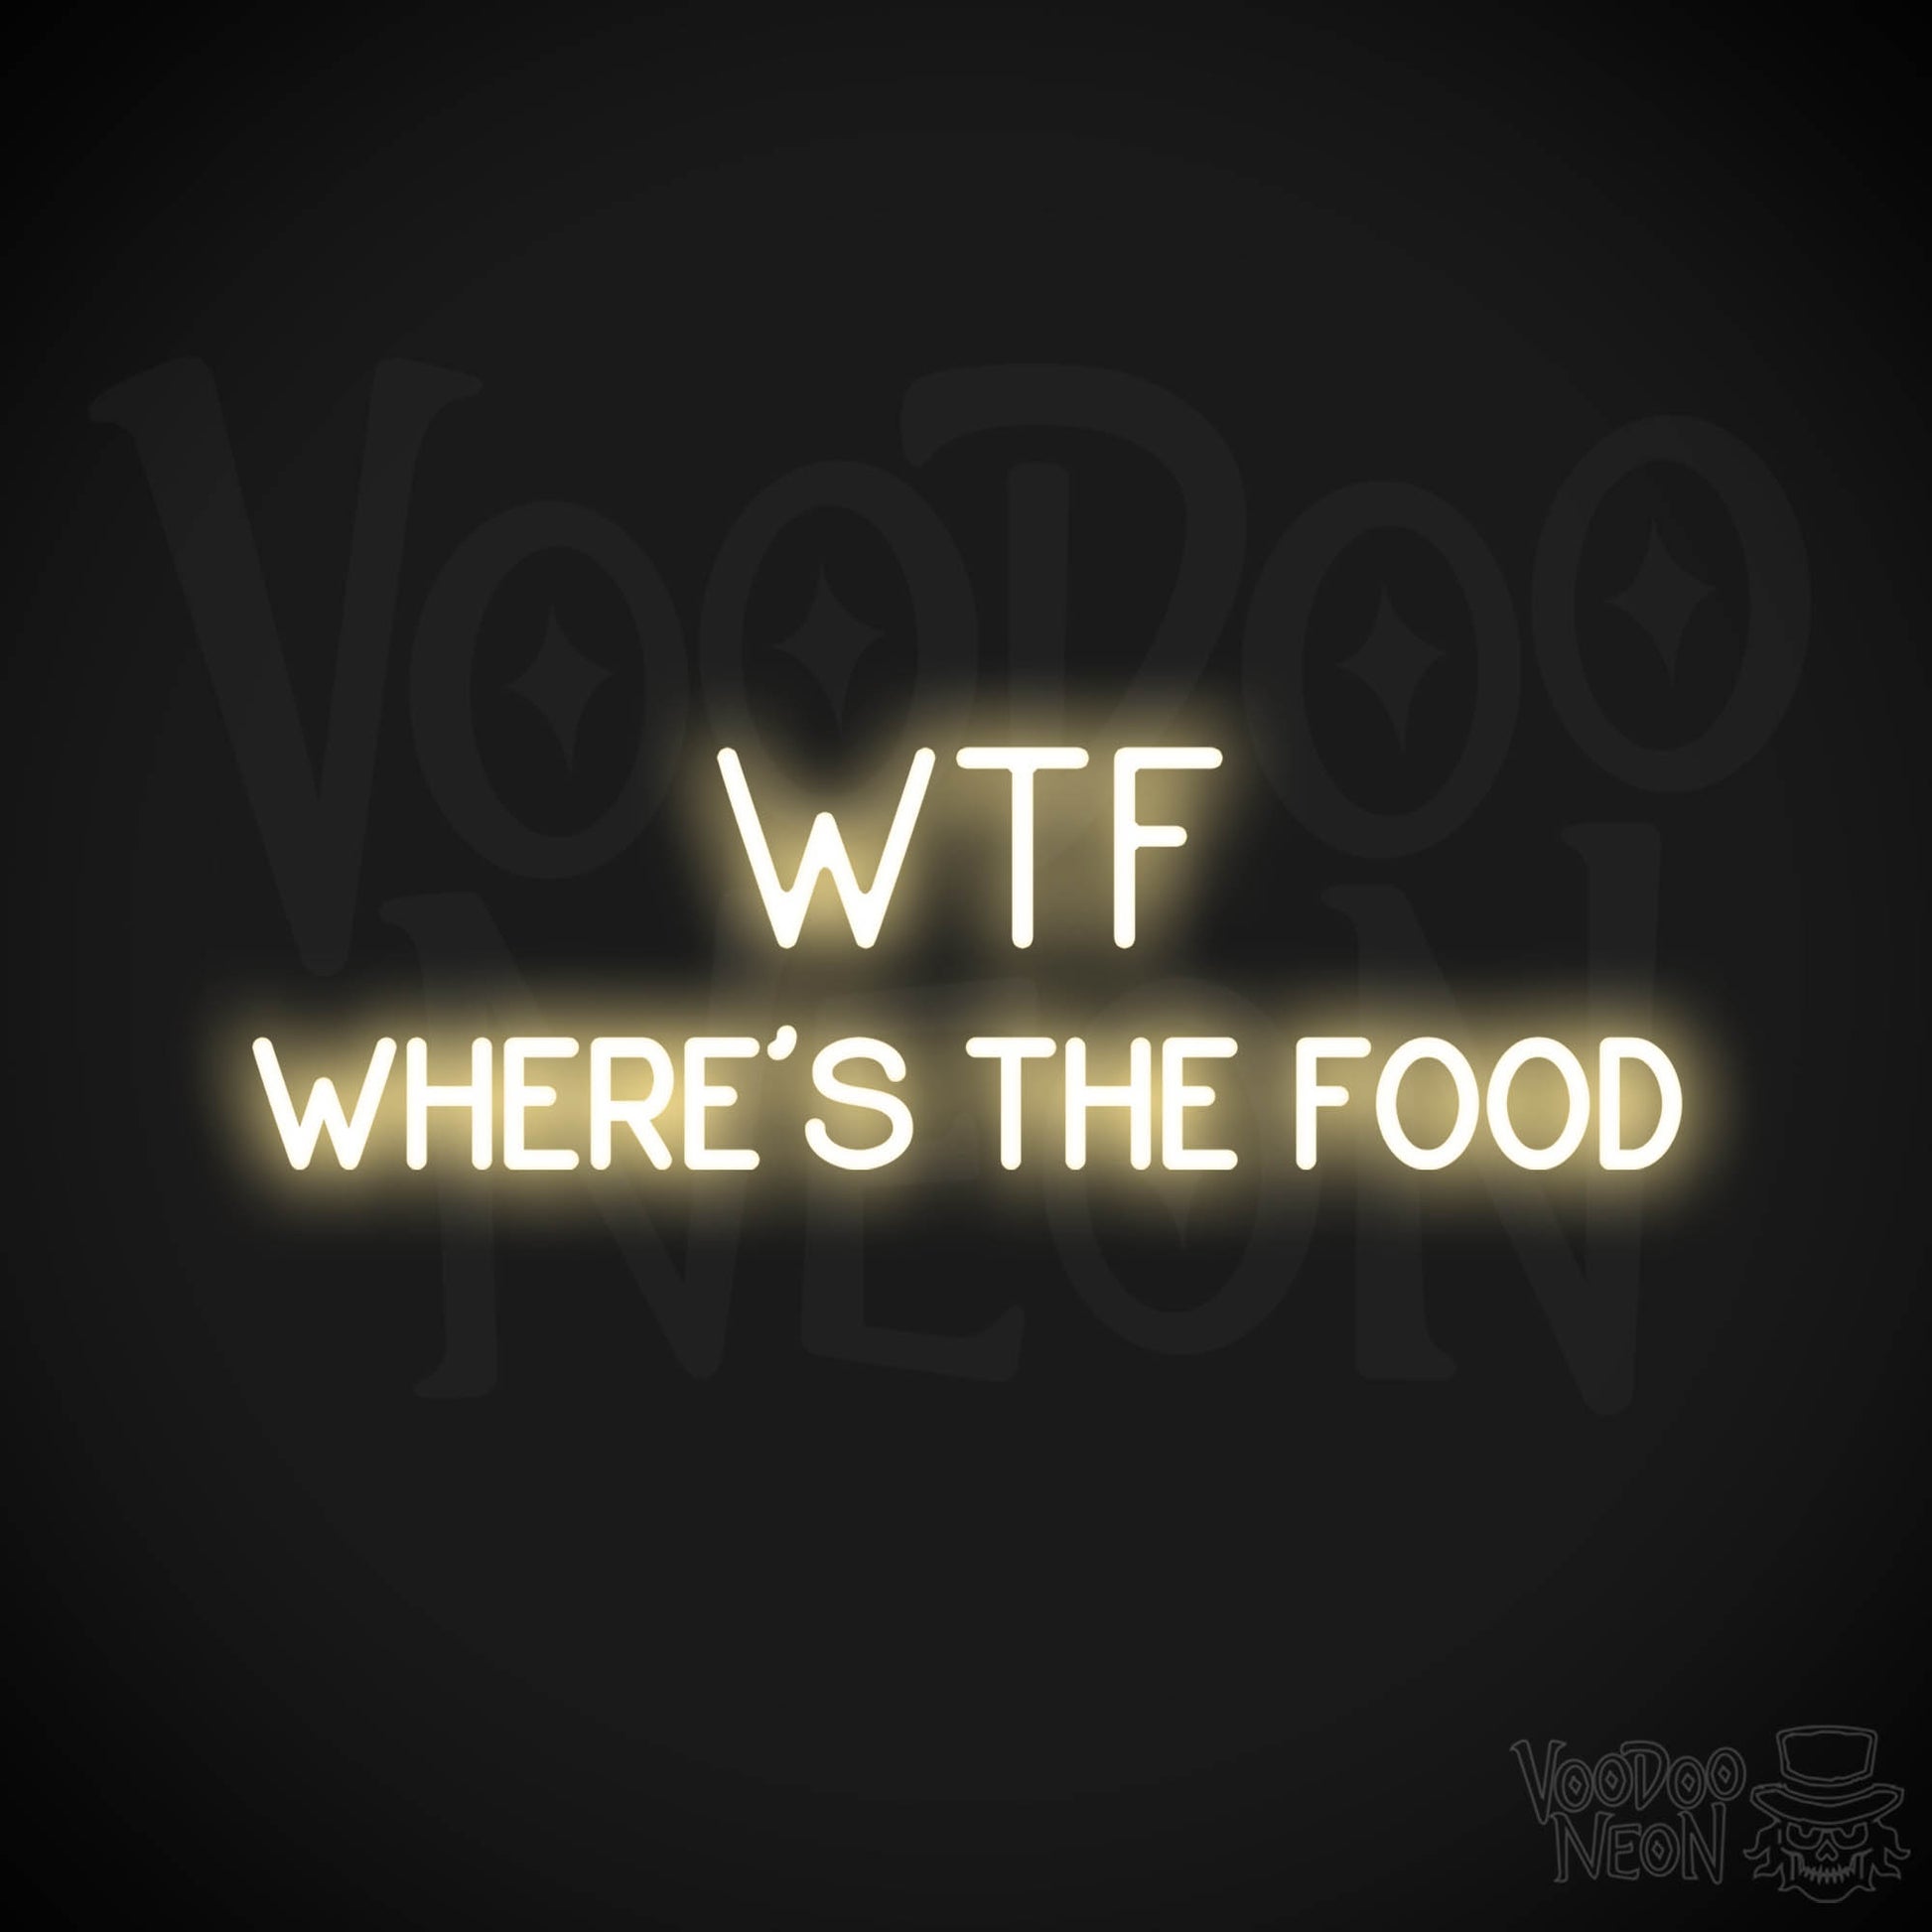 Wtf (Wheres The Food) LED Neon - Warm White